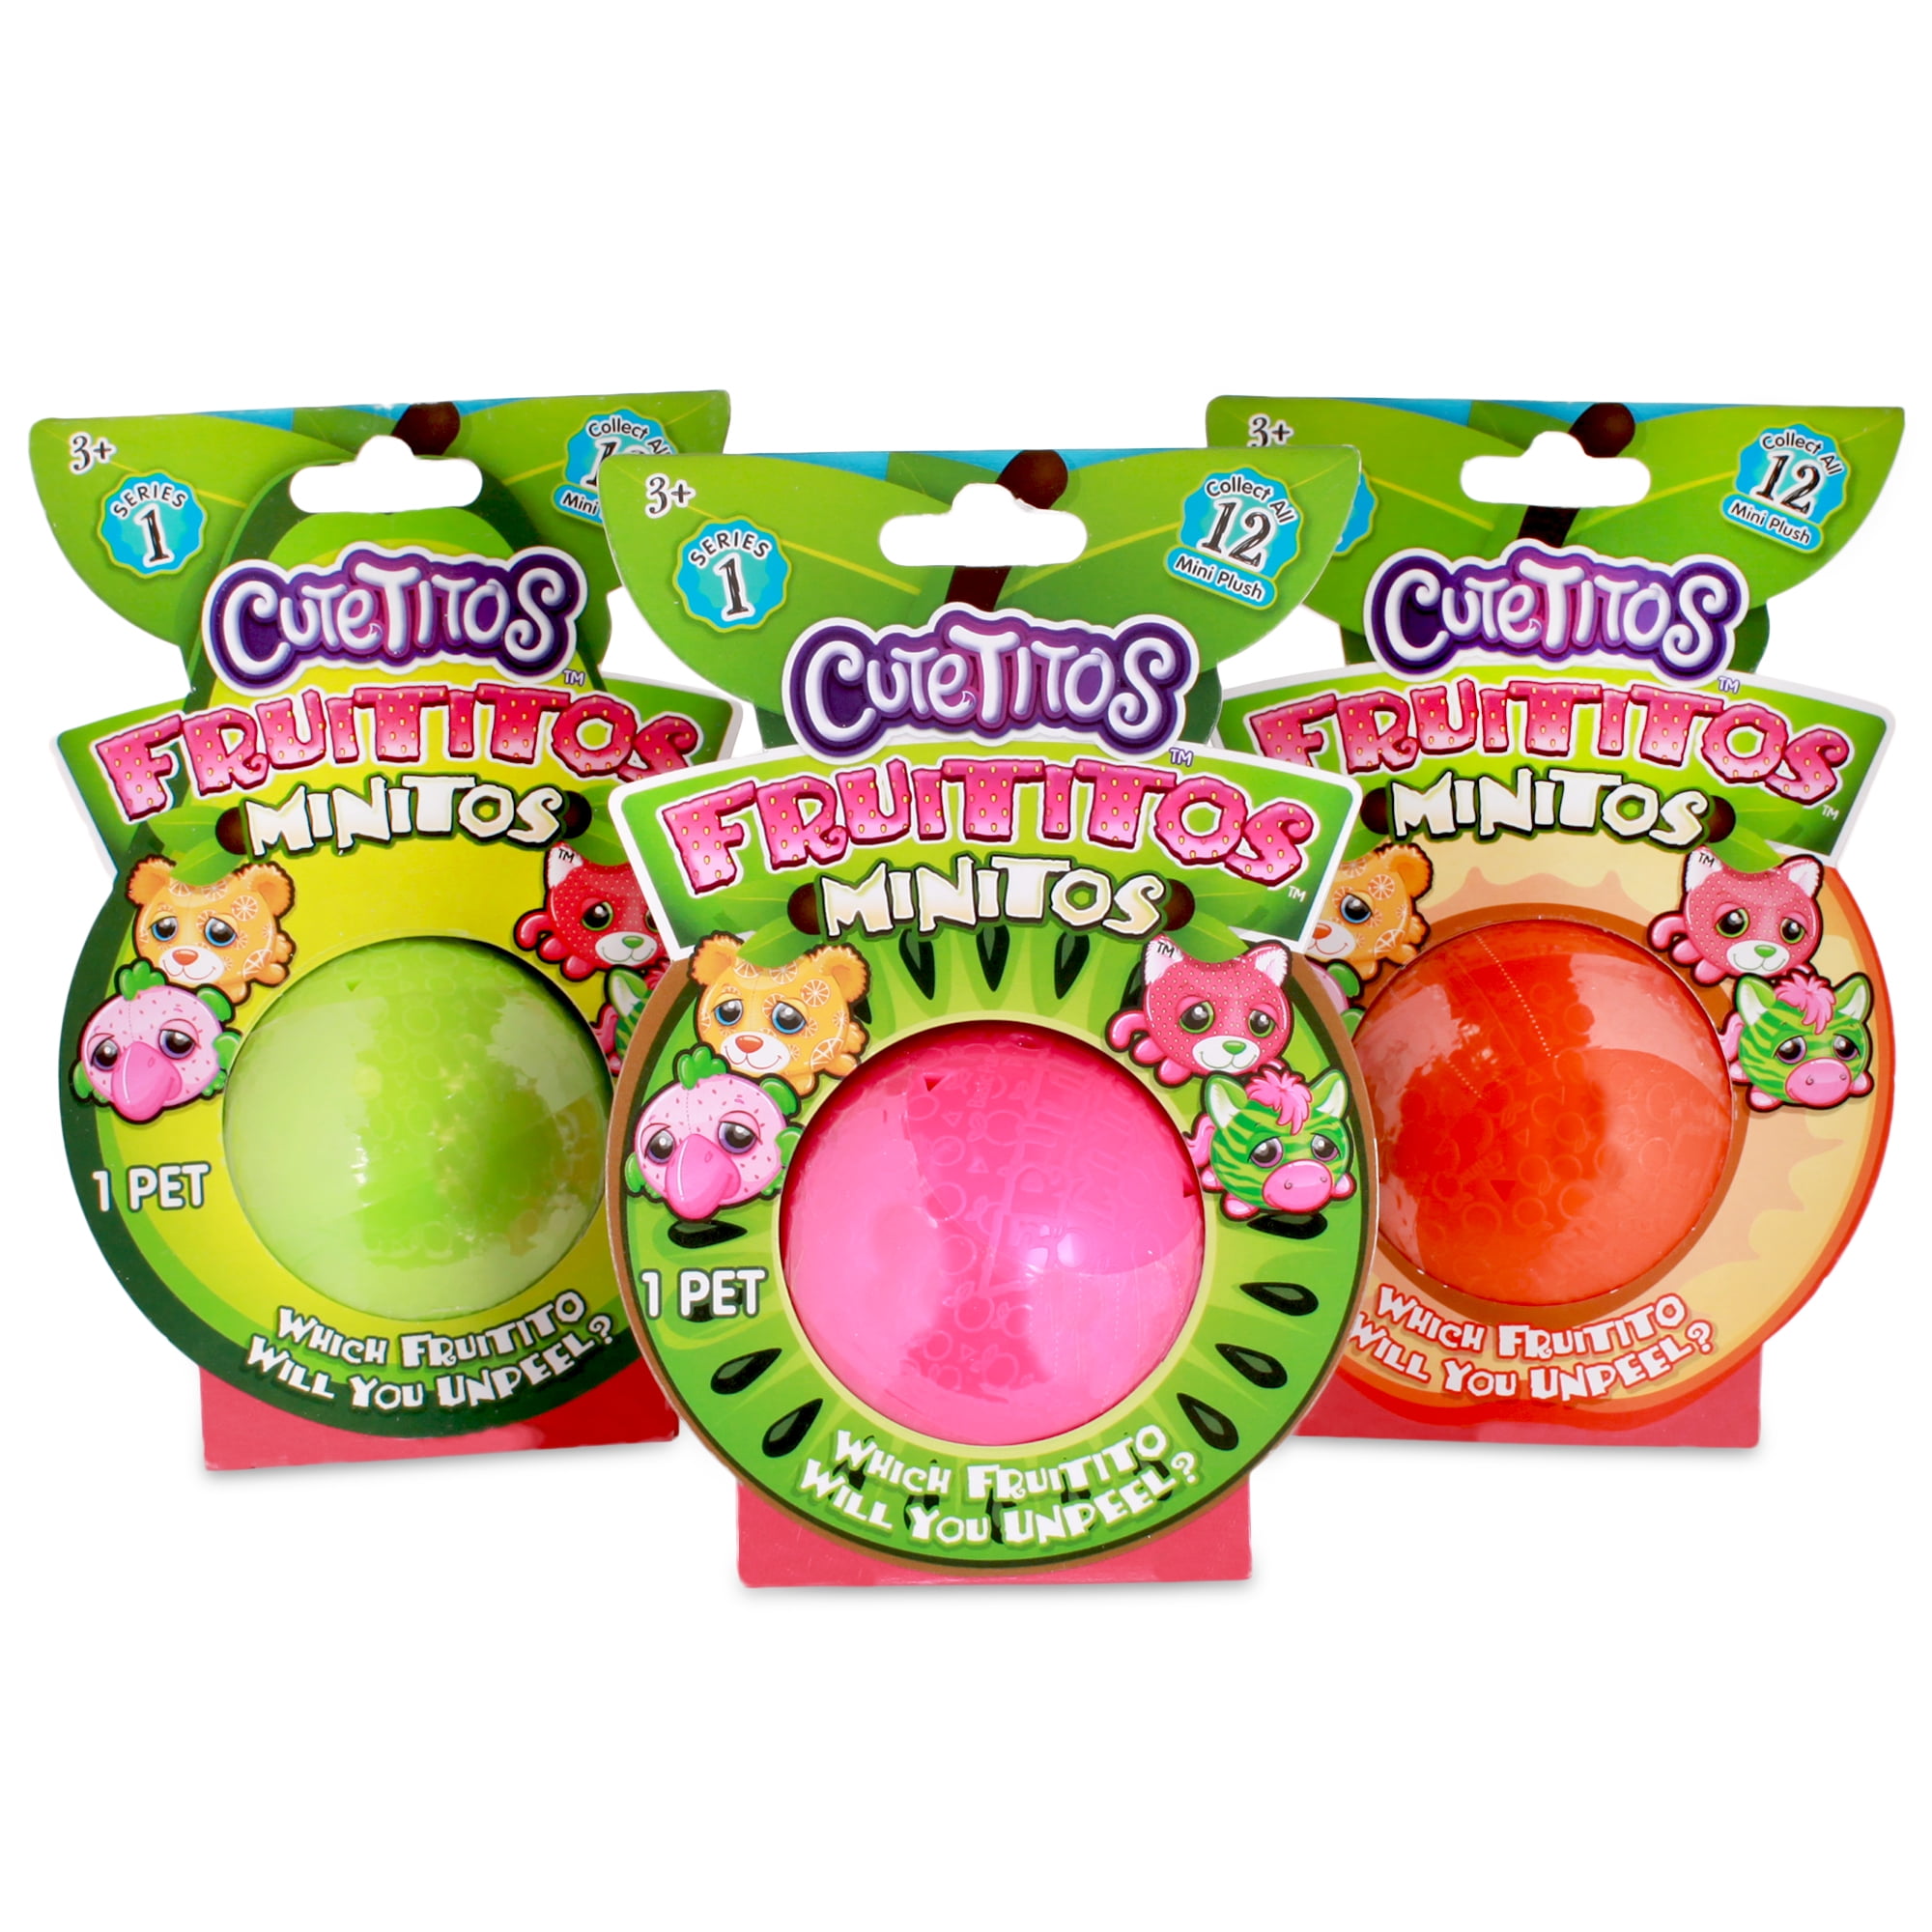 Cutetitos Fruititos Minitos Mystery Mini Plush Berry Series Pet Bambooito Panda 